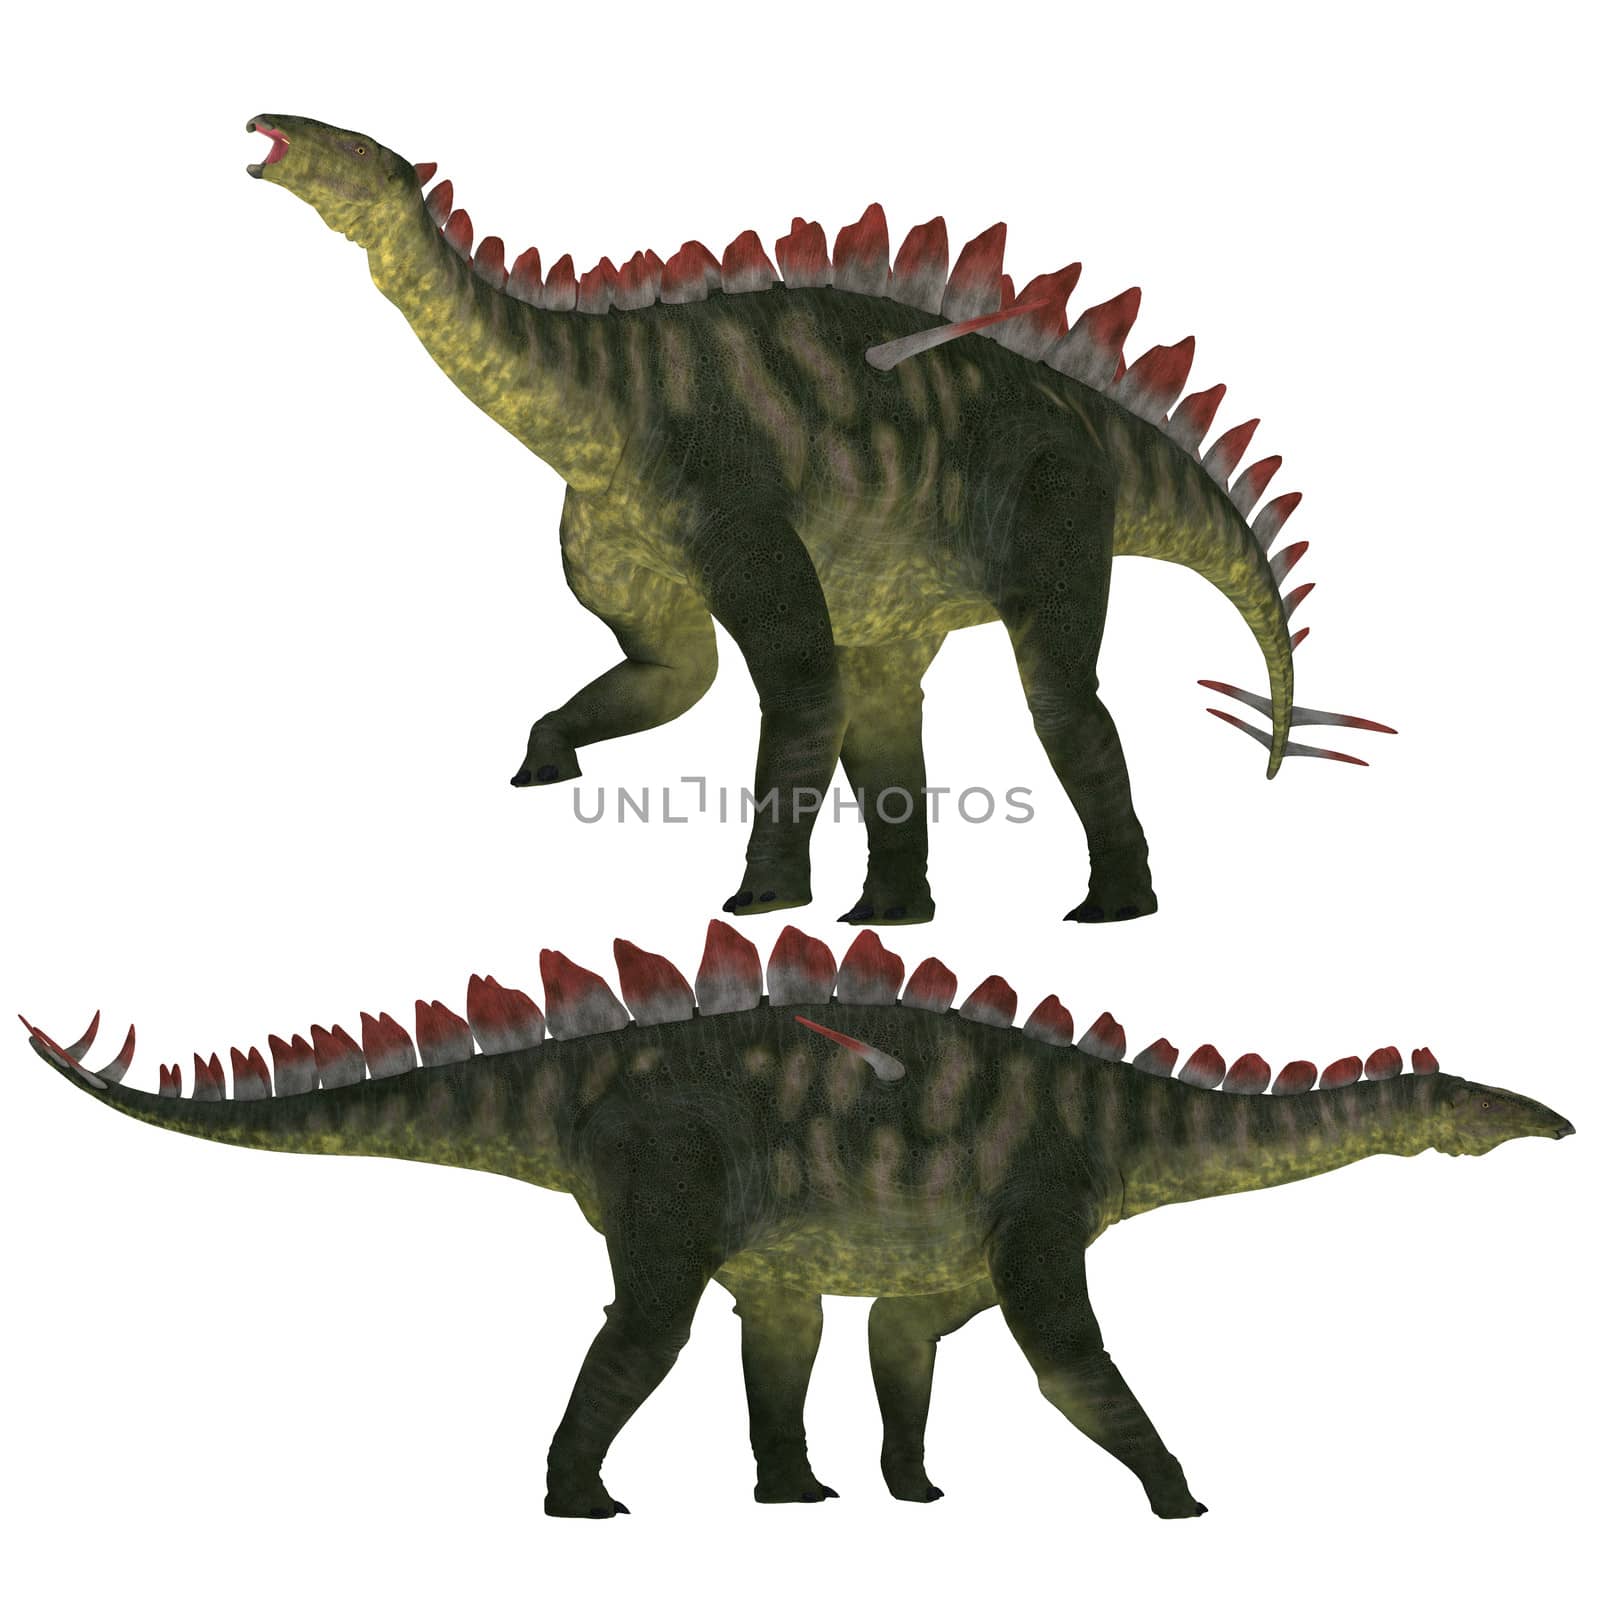 Miragaia is a genus of stegosaurid dinosaur that lived in the Upper Jurassic Era.